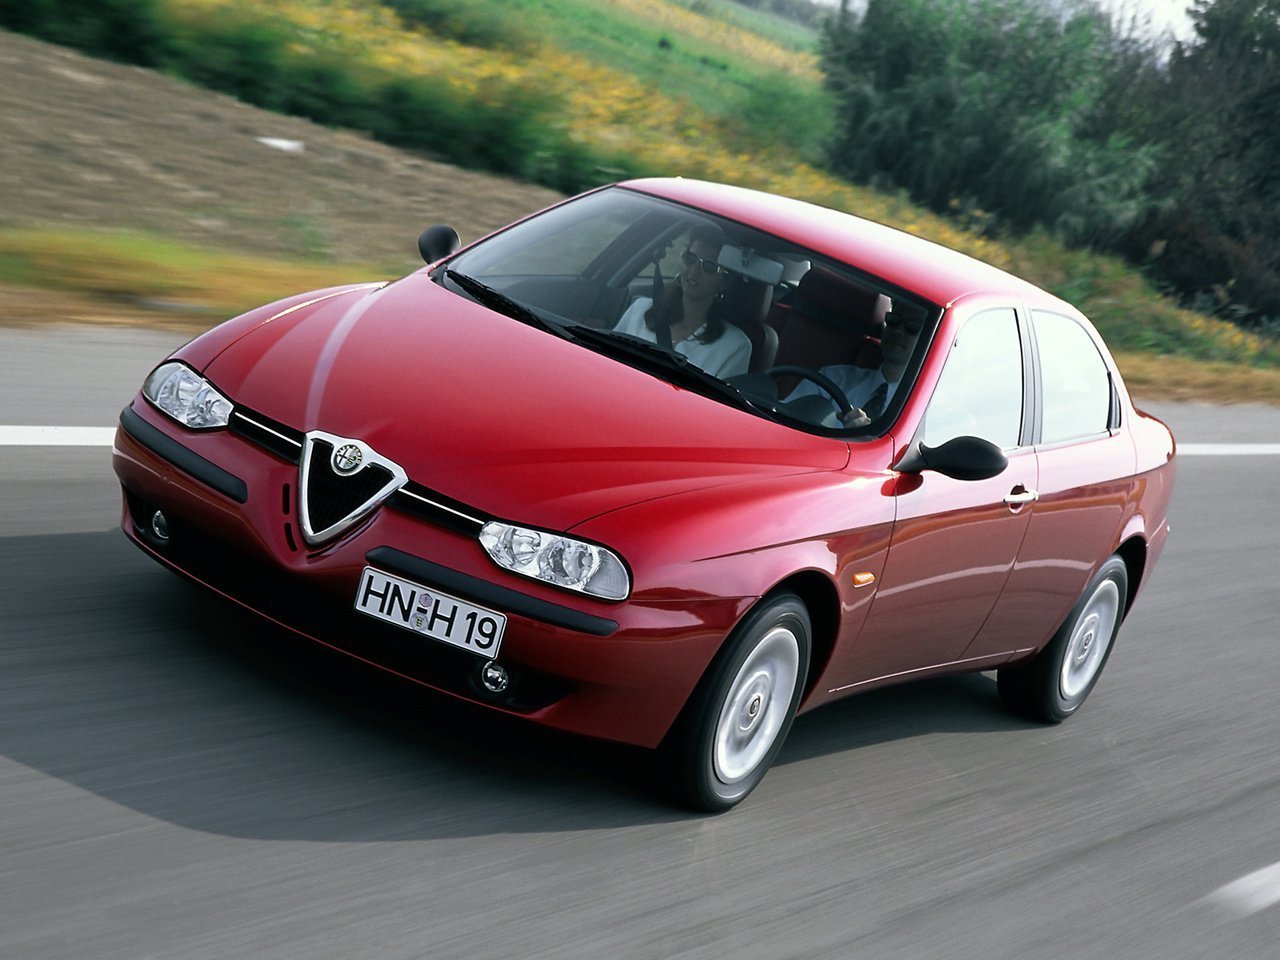 Расход газа шести комплектаций седана Alfa Romeo 156. Разница стоимости заправки газом и бензином. Автономный пробег до и после установки ГБО.